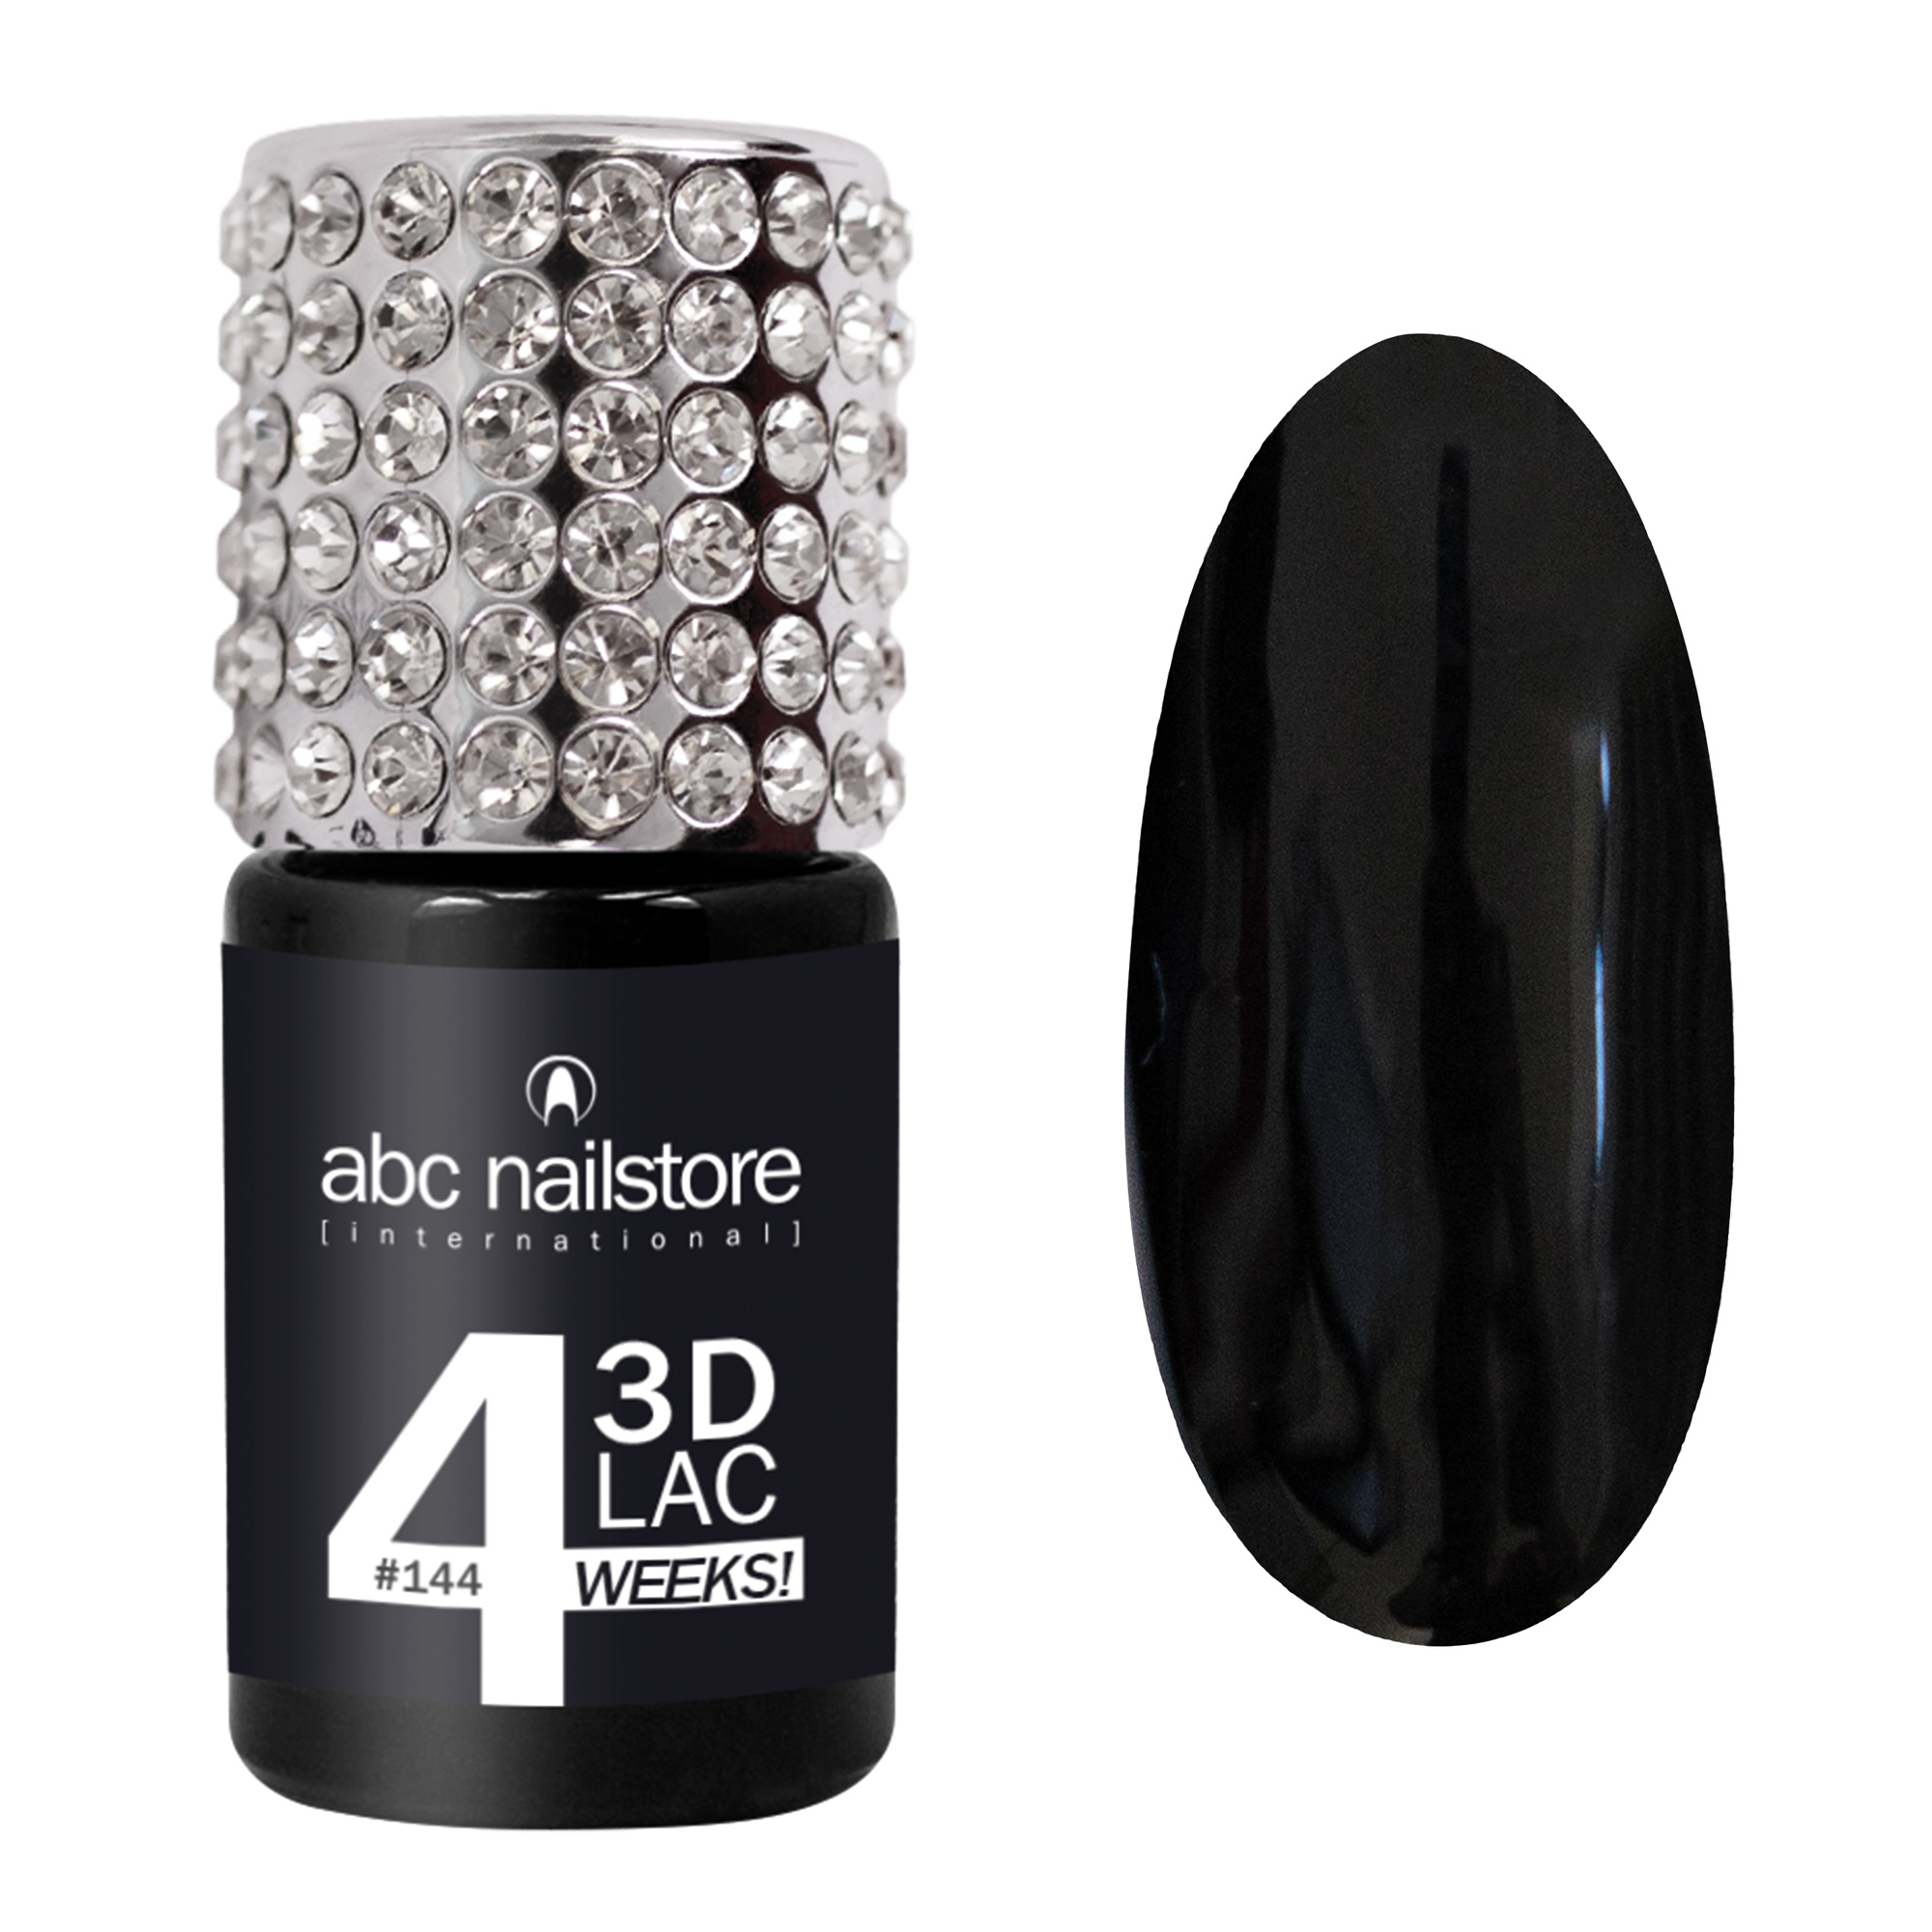 abc nailstore 3DLac 4WEEKS, black velvet  #144, 8 ml